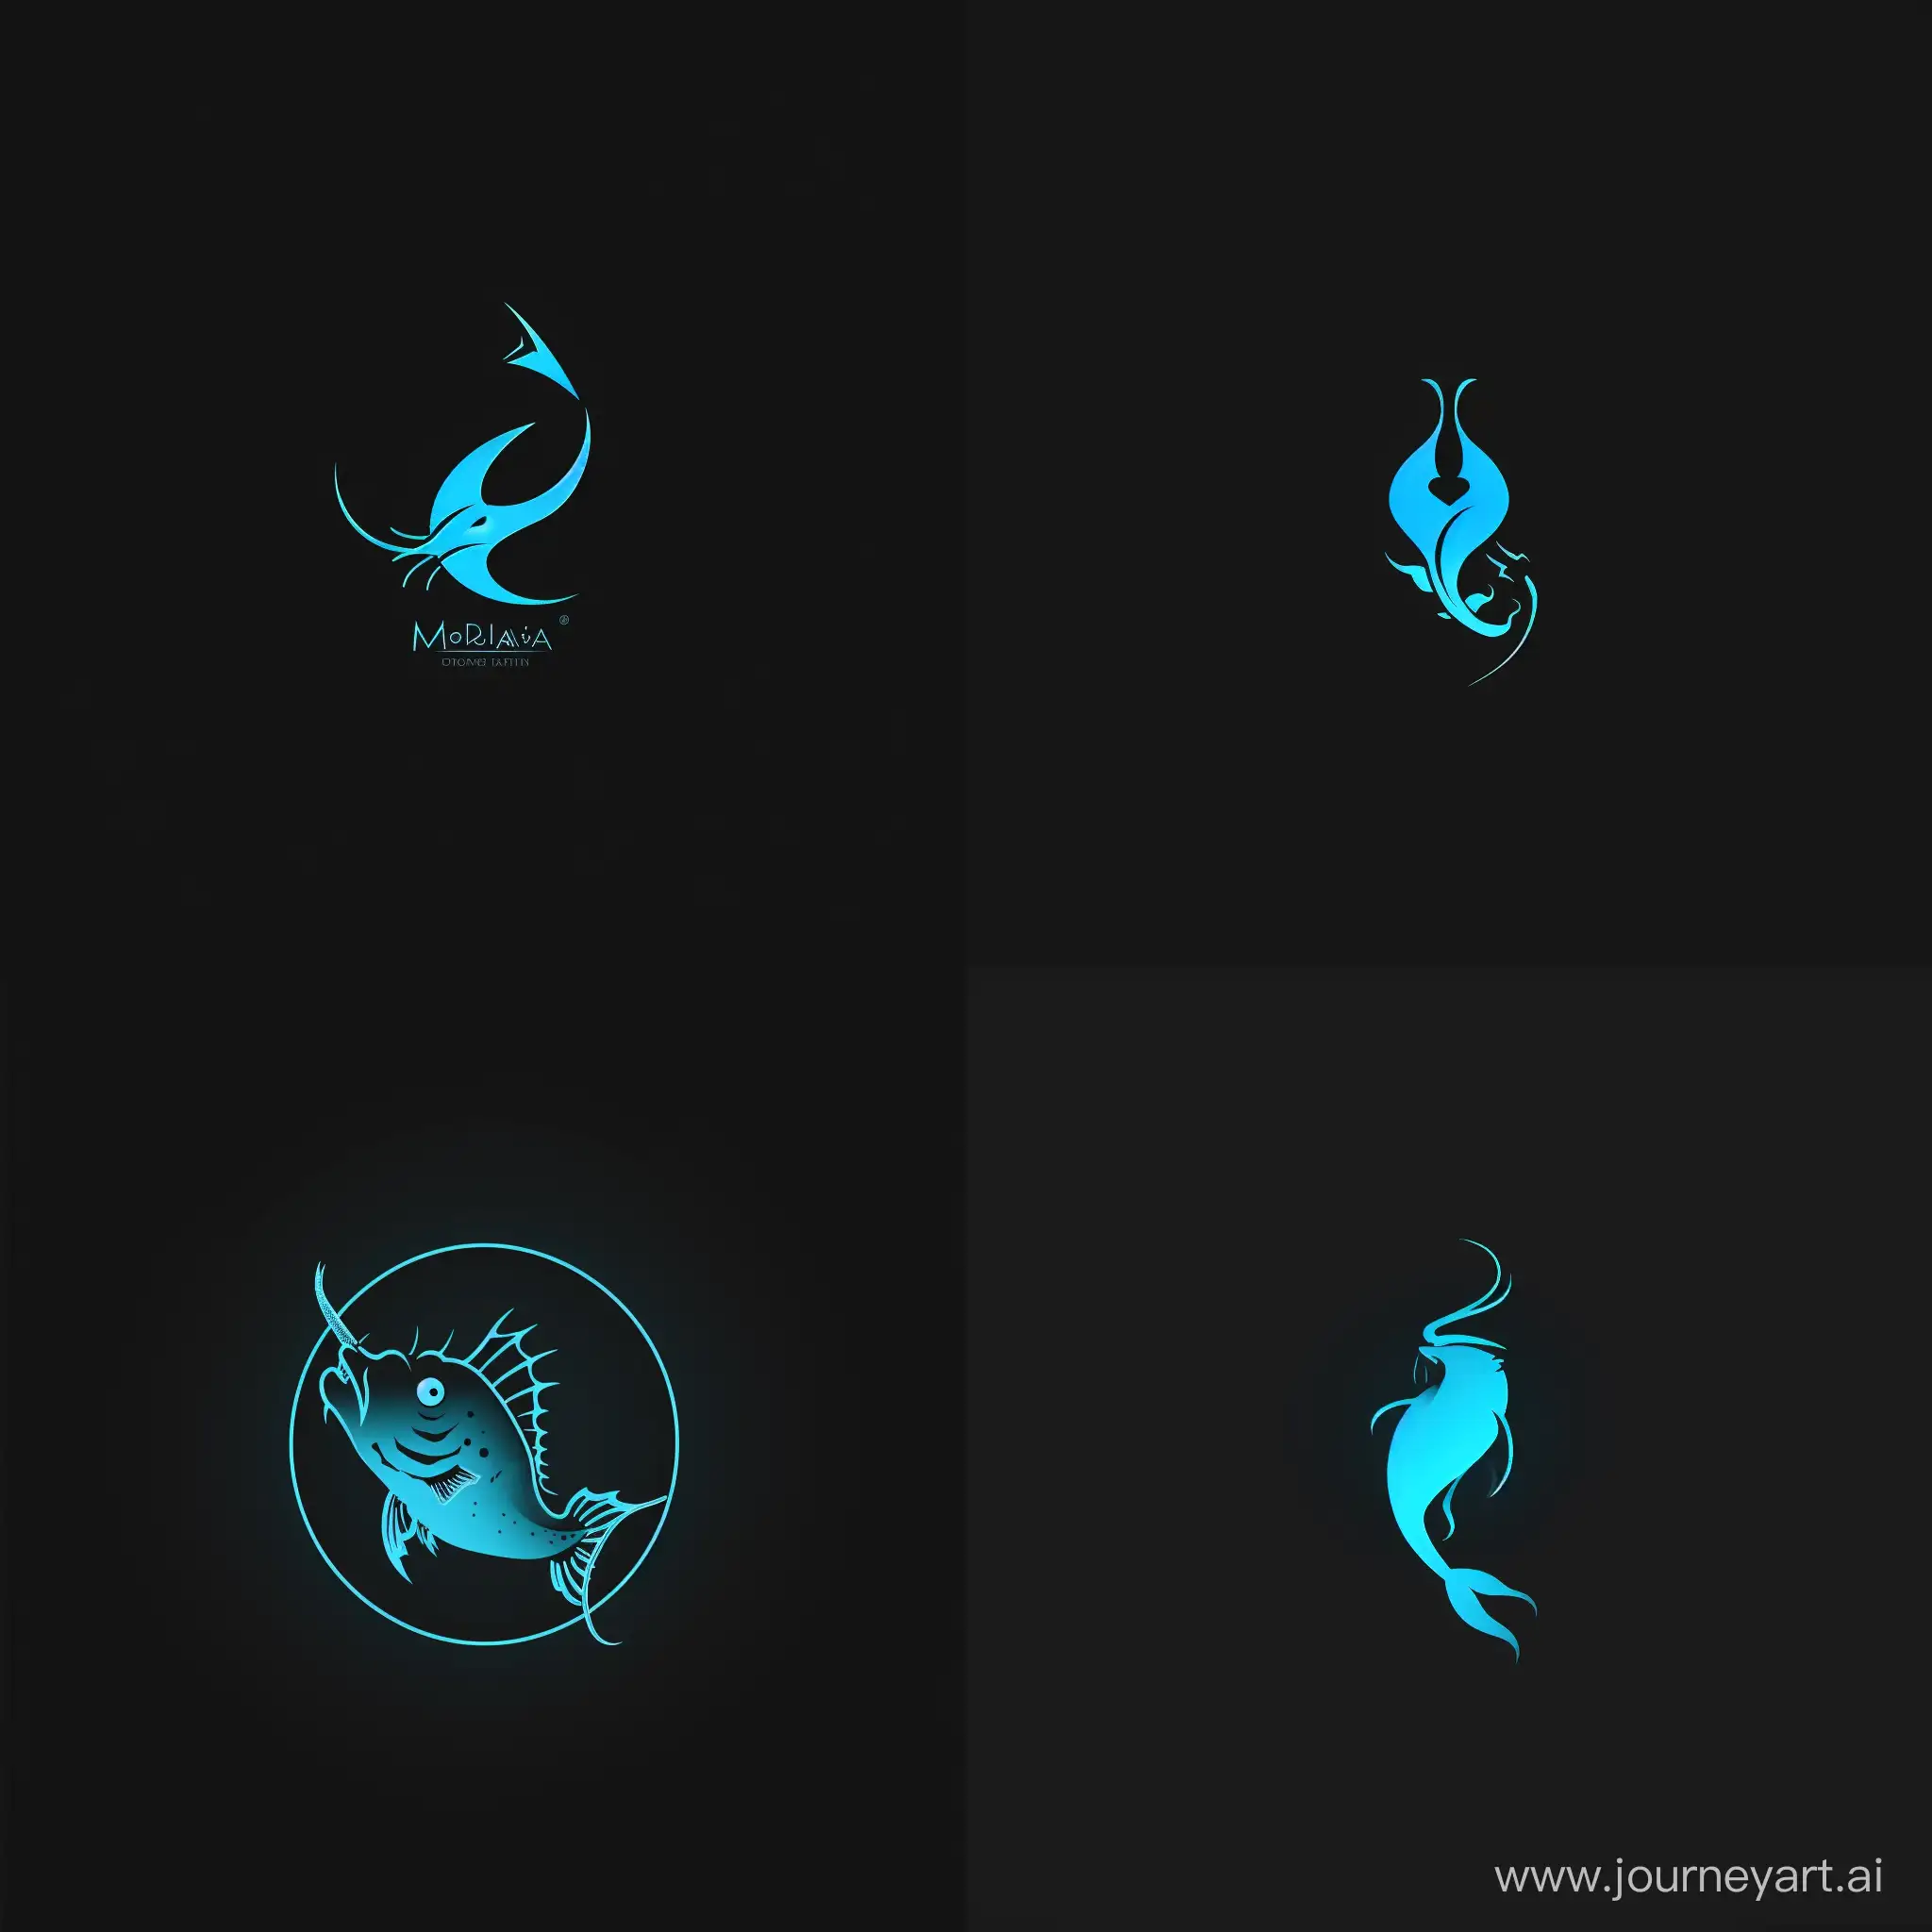 Calm-Medusa-Minimalistic-AcidBlue-Anglerfish-Logo-on-Black-Background